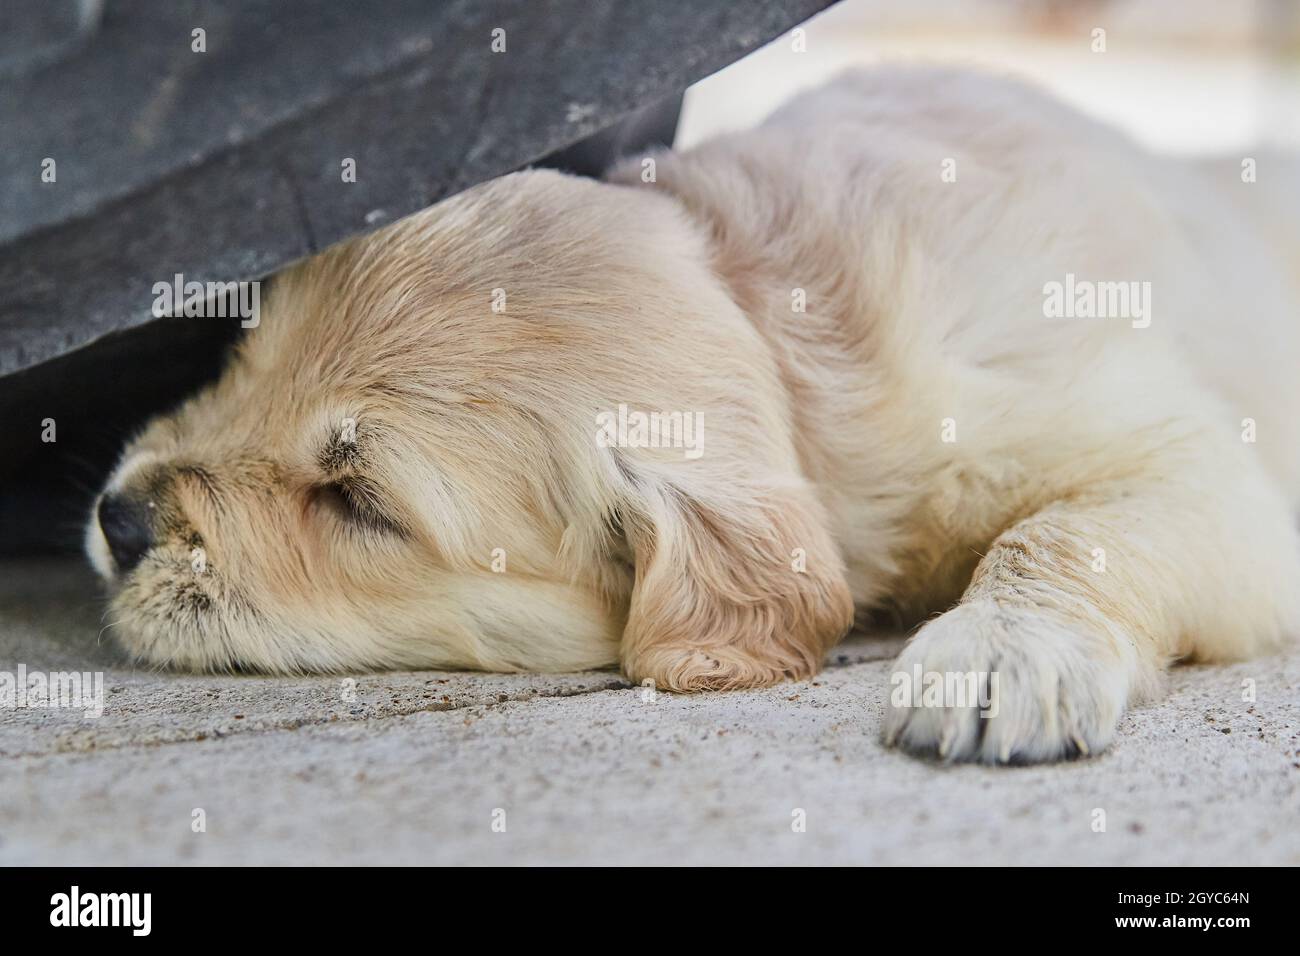 Adorable sleeping golden retriever on cement surface Stock Photo